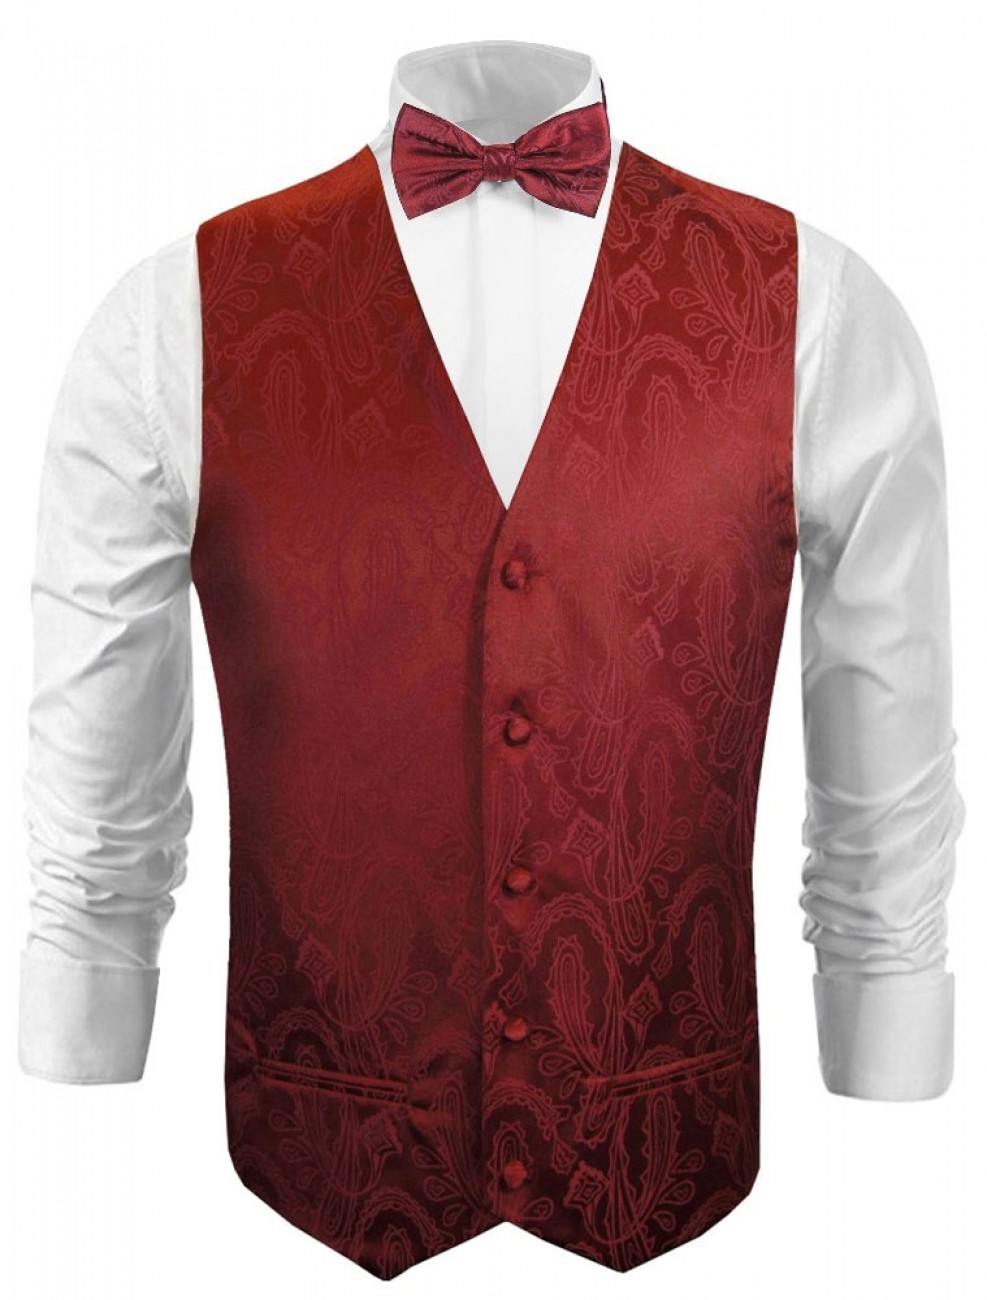 Wedding vest waistcoat maroon red paisley